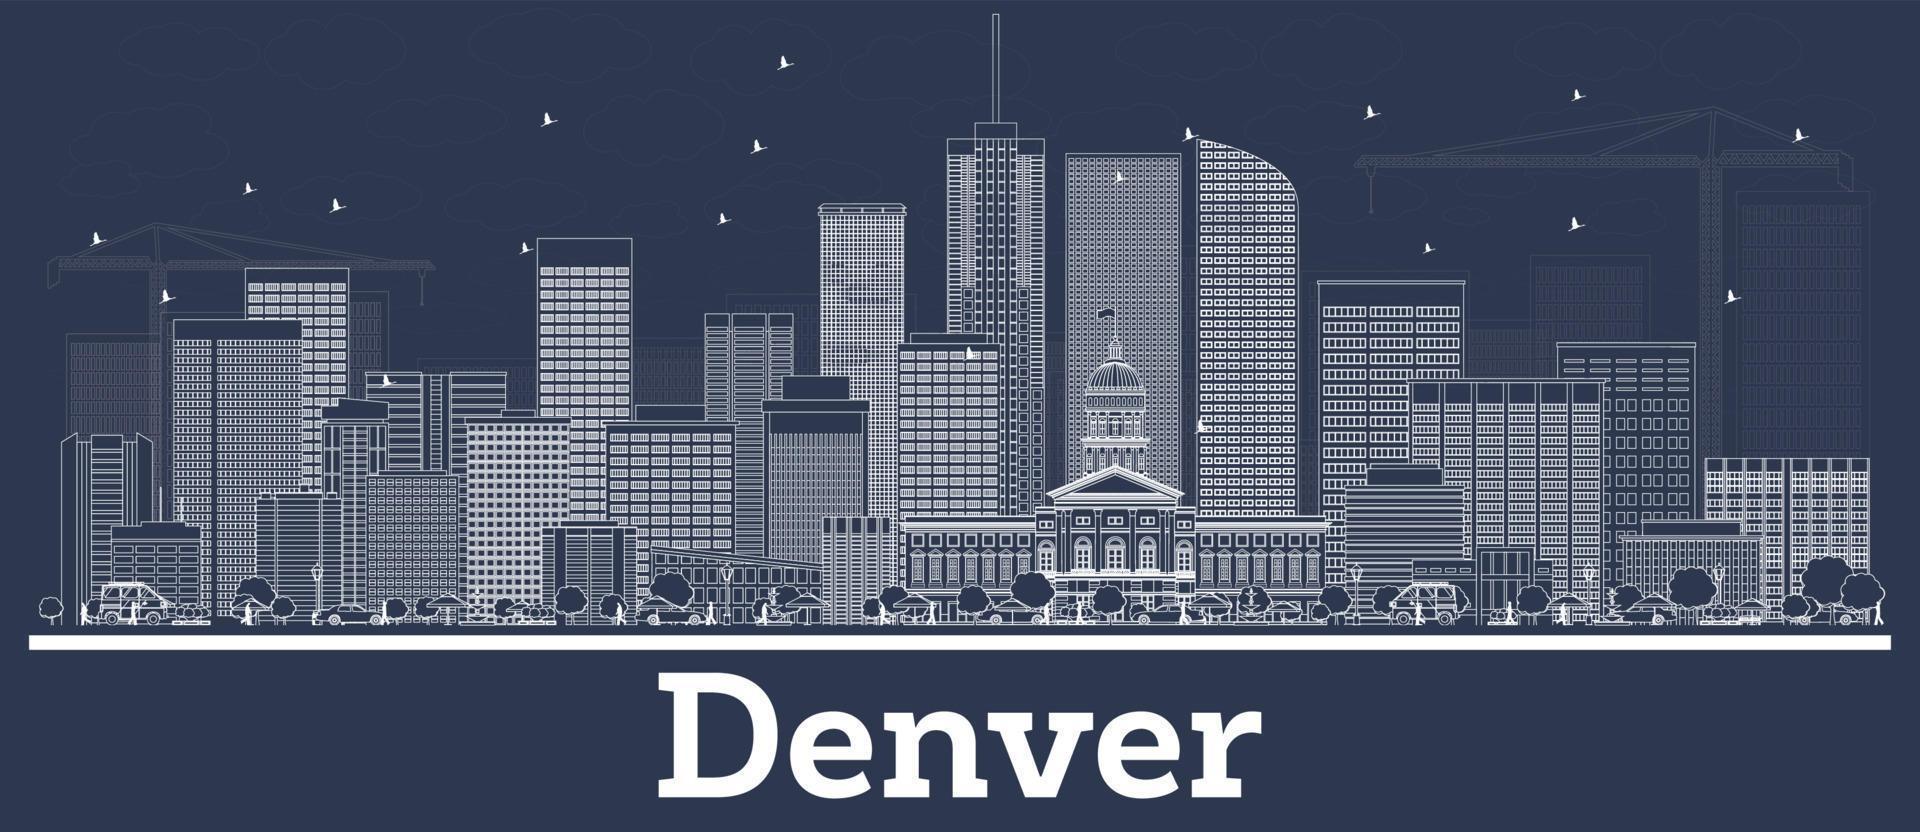 Outline Denver Colorado City Skyline with White Buildings. vector